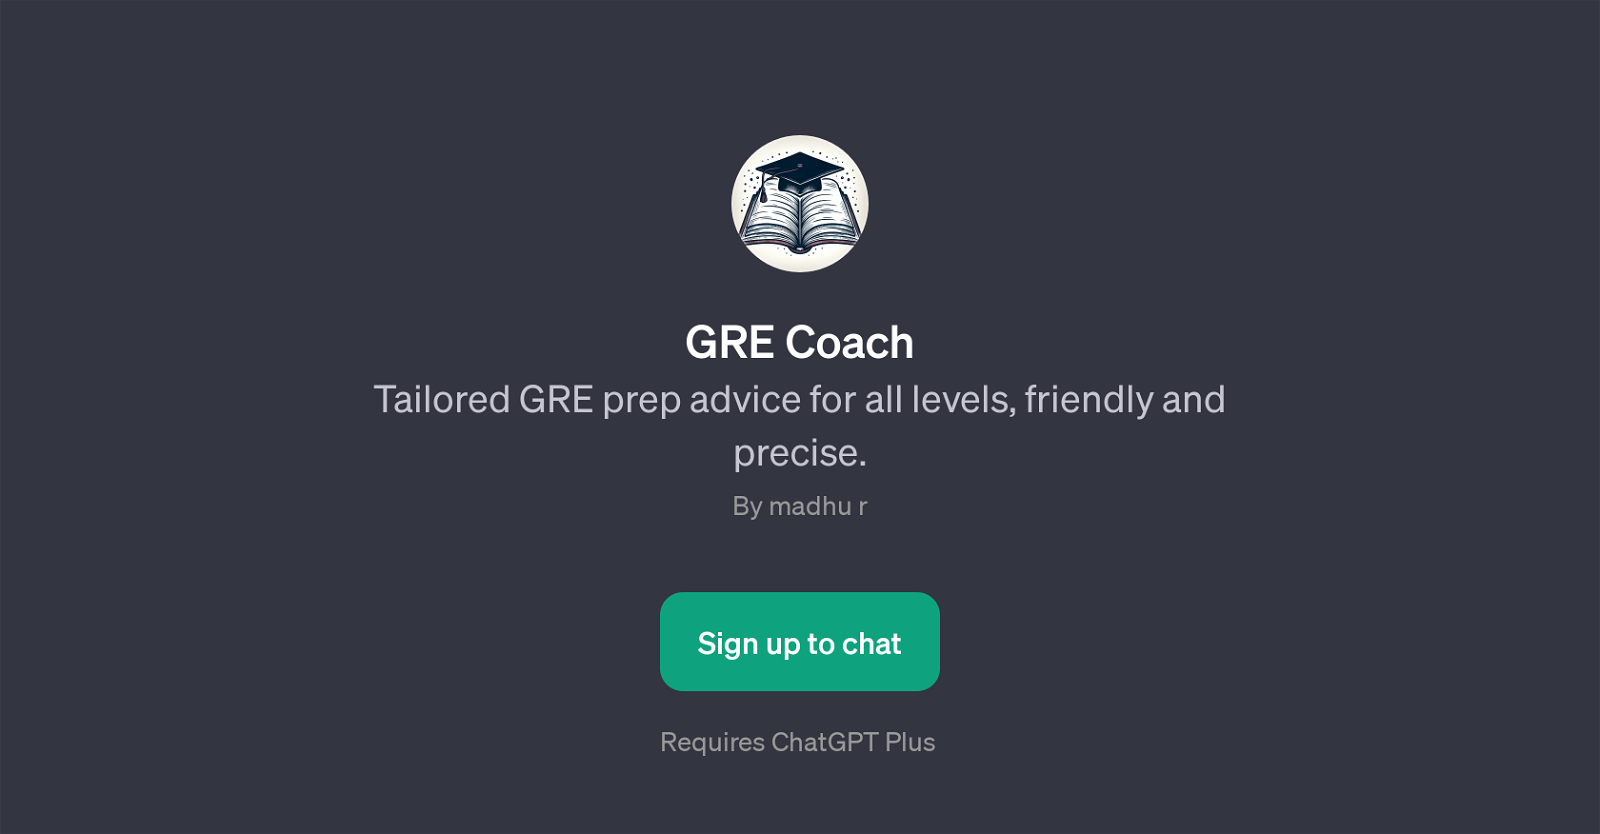 GRE Coach website